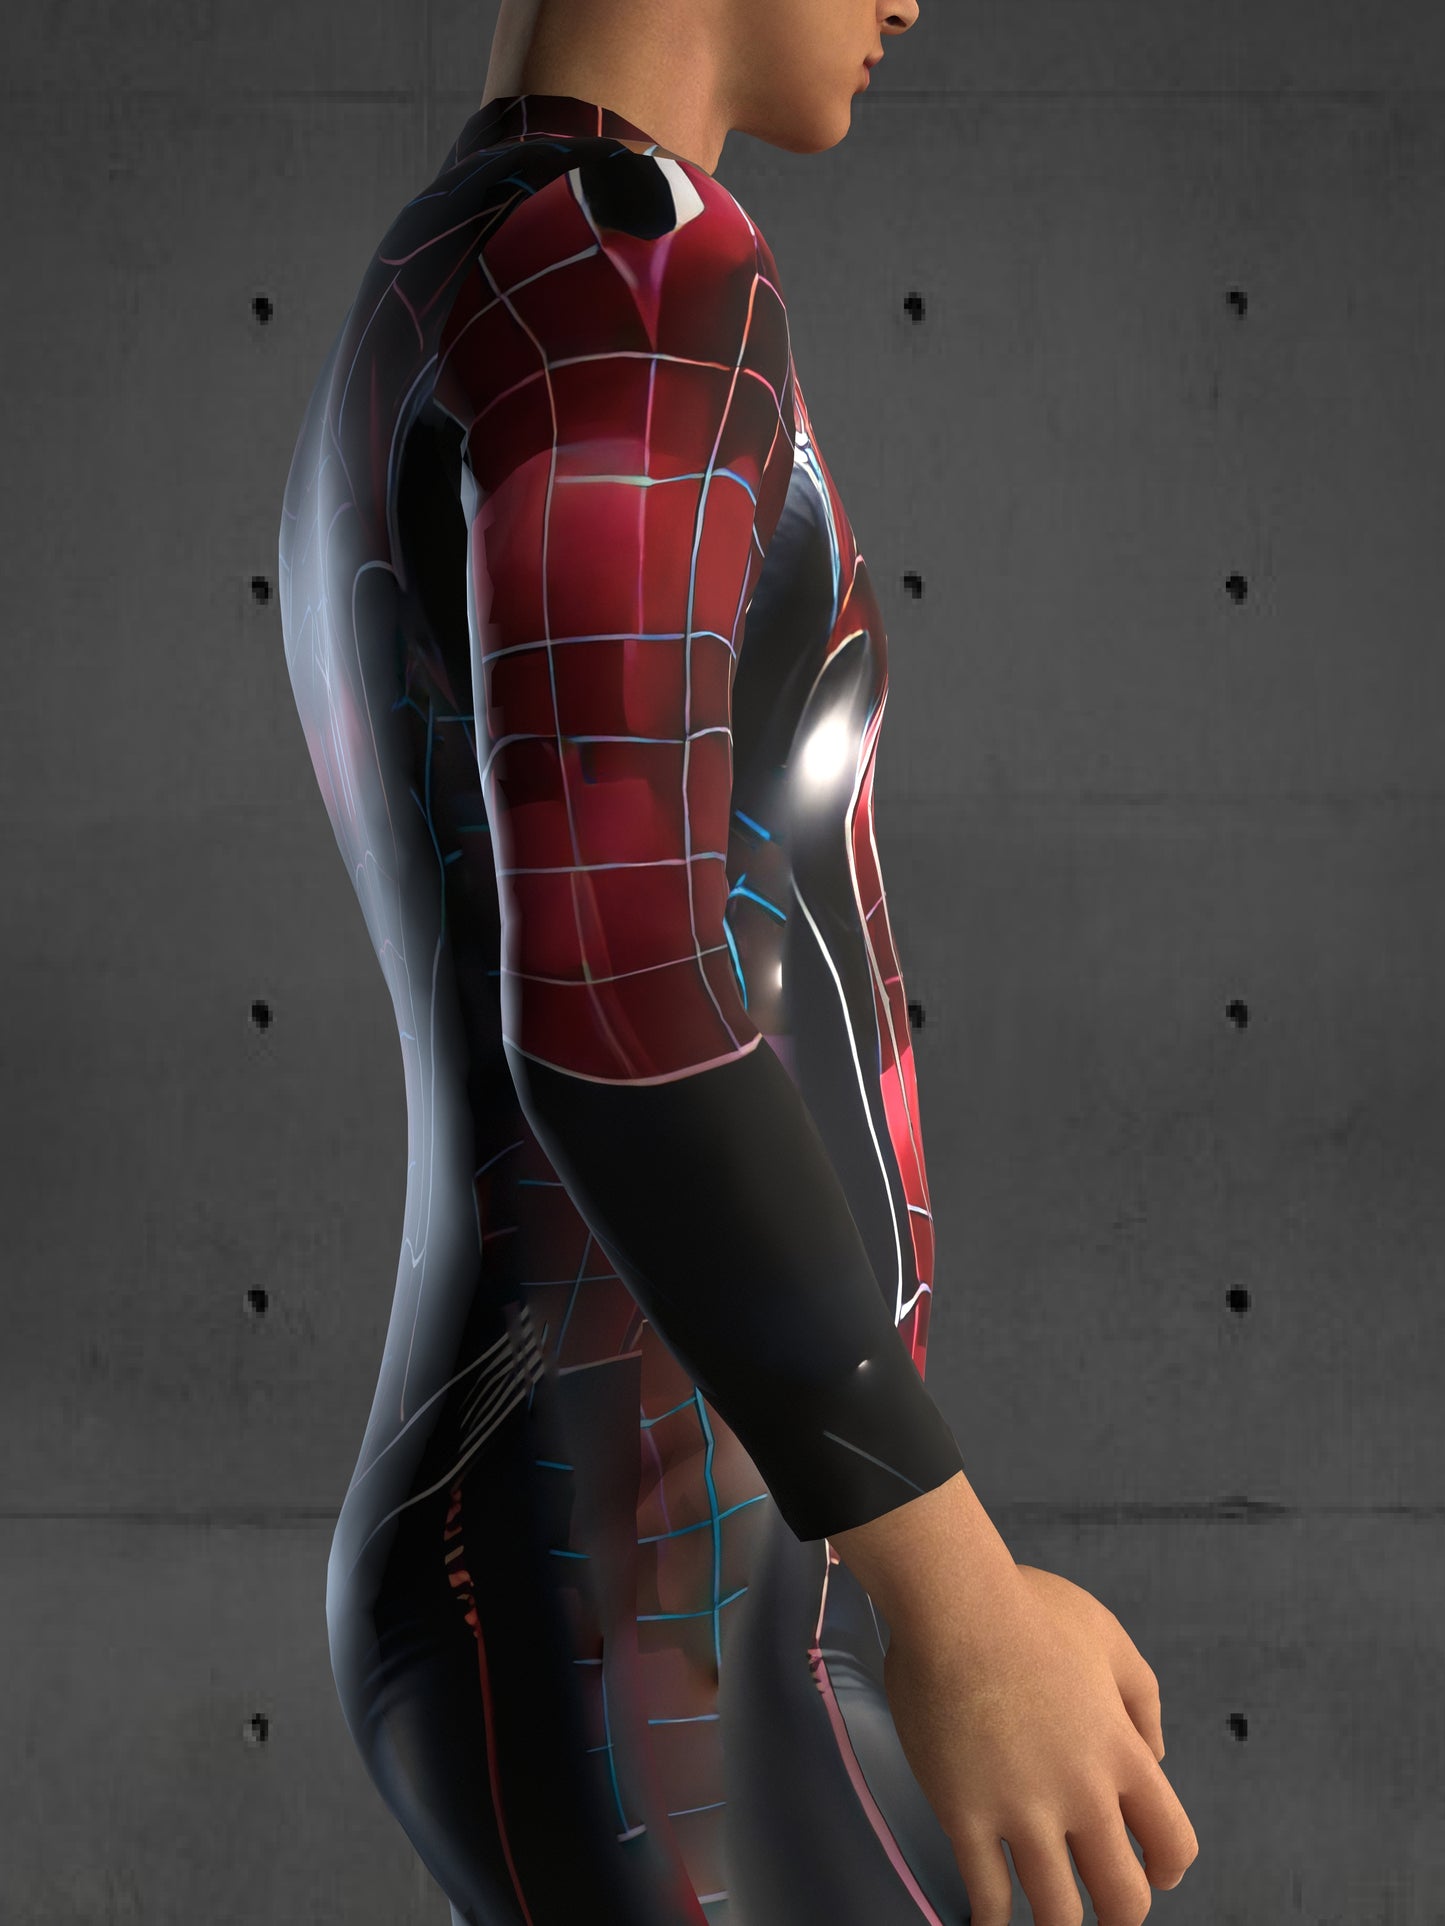 A36M Spider Universe Costume for Men, Black, Custom Fit Available, Futuristic Superhero Cosplay, Halloween Costume